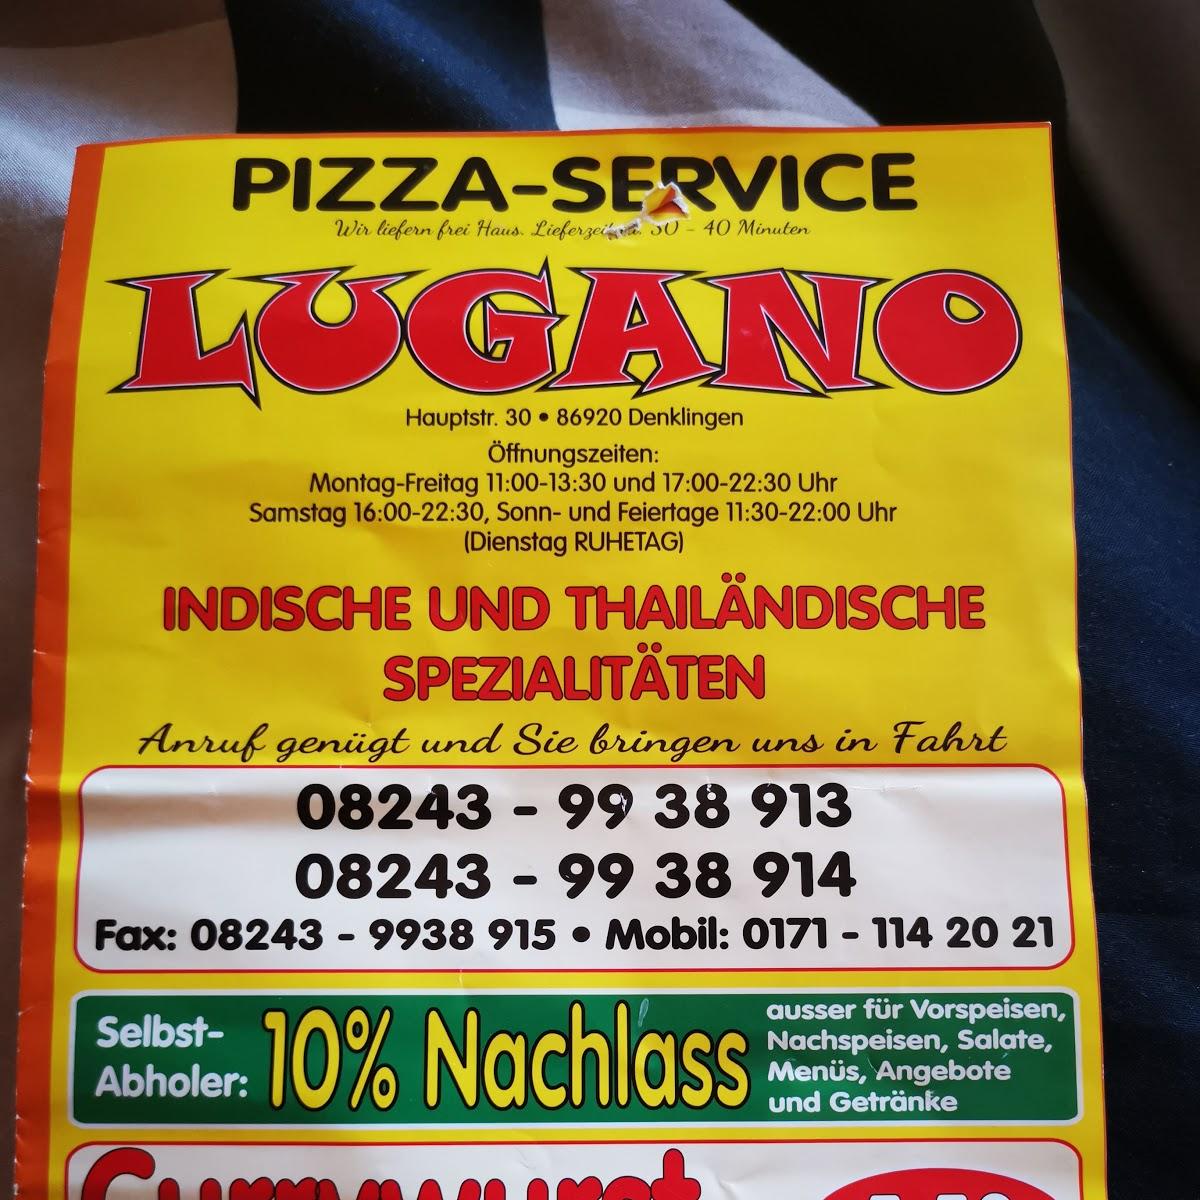 Restaurant "Pizza Service Lugano" in  Denklingen